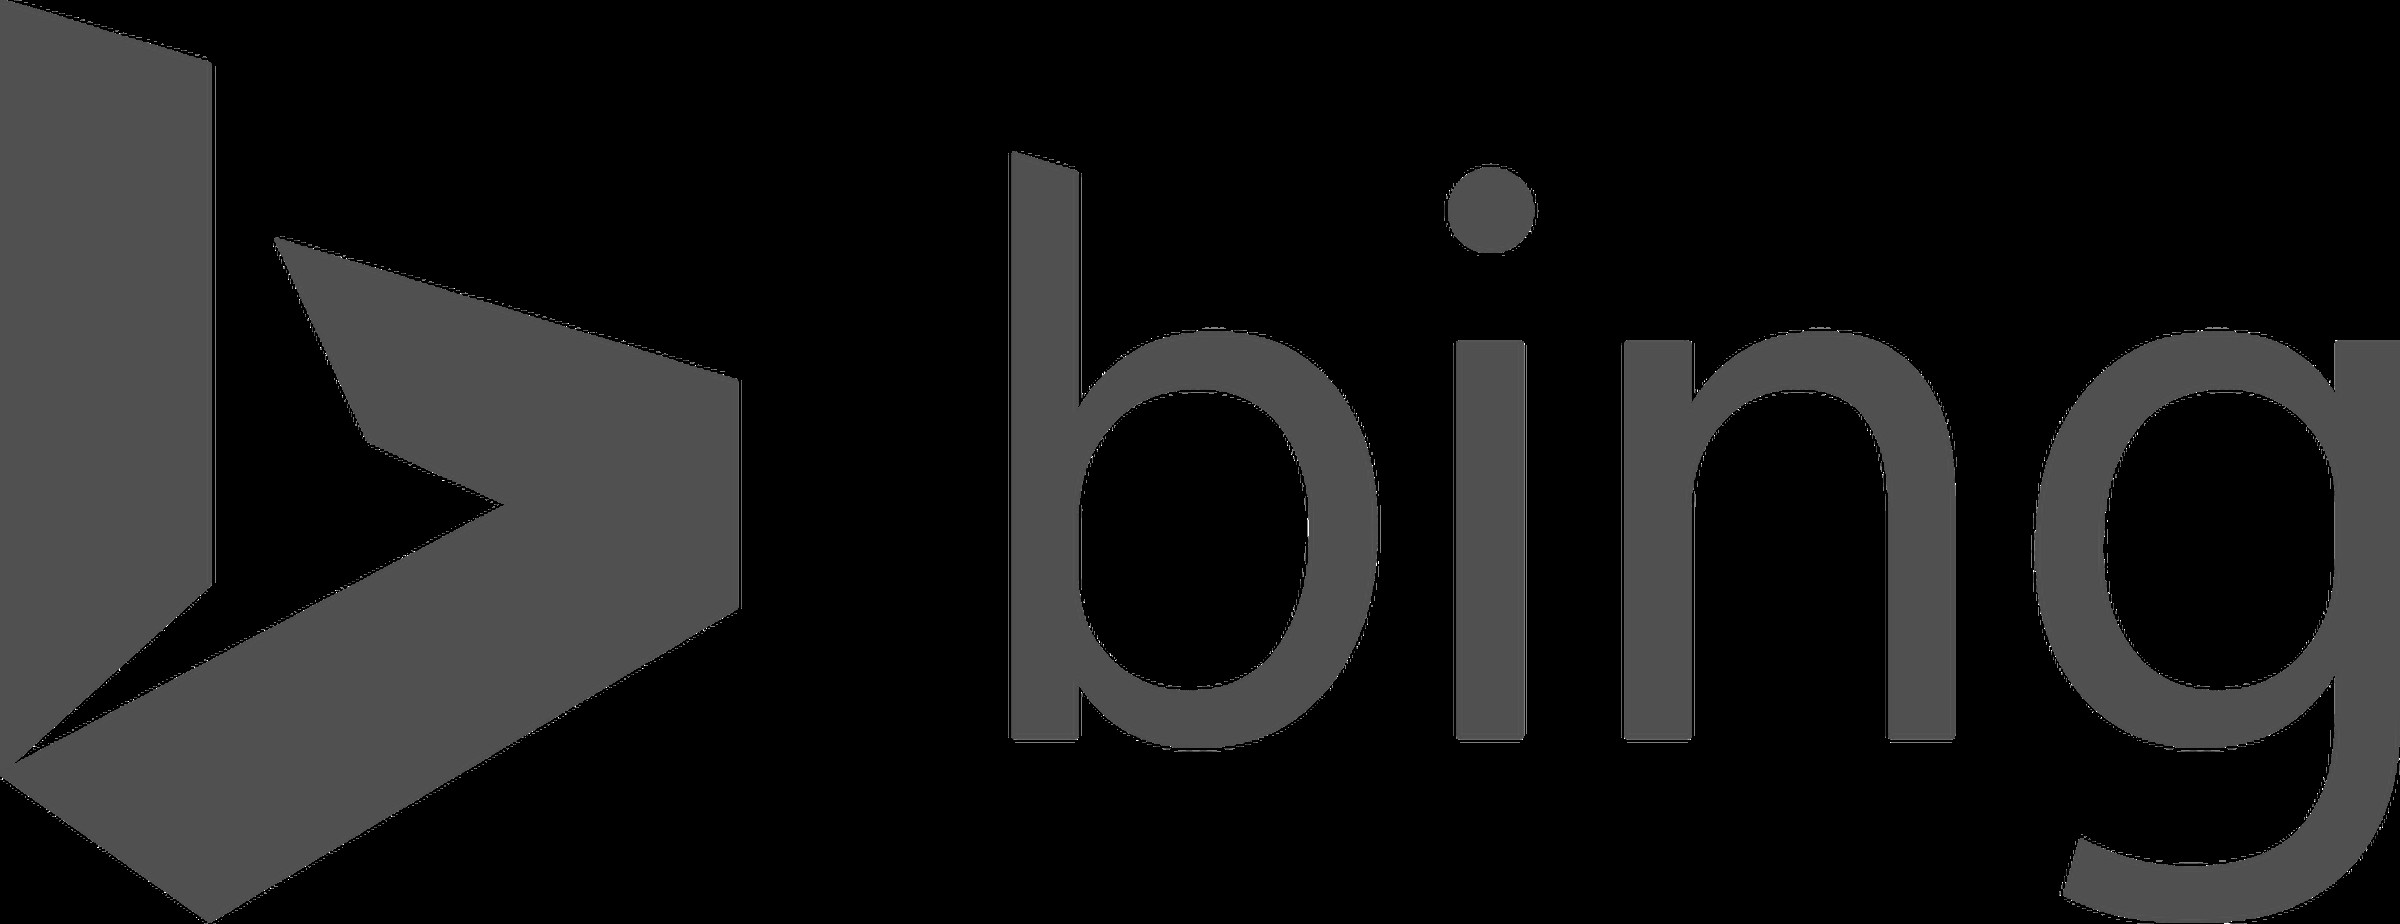 New Bing logo and redesign screenshots